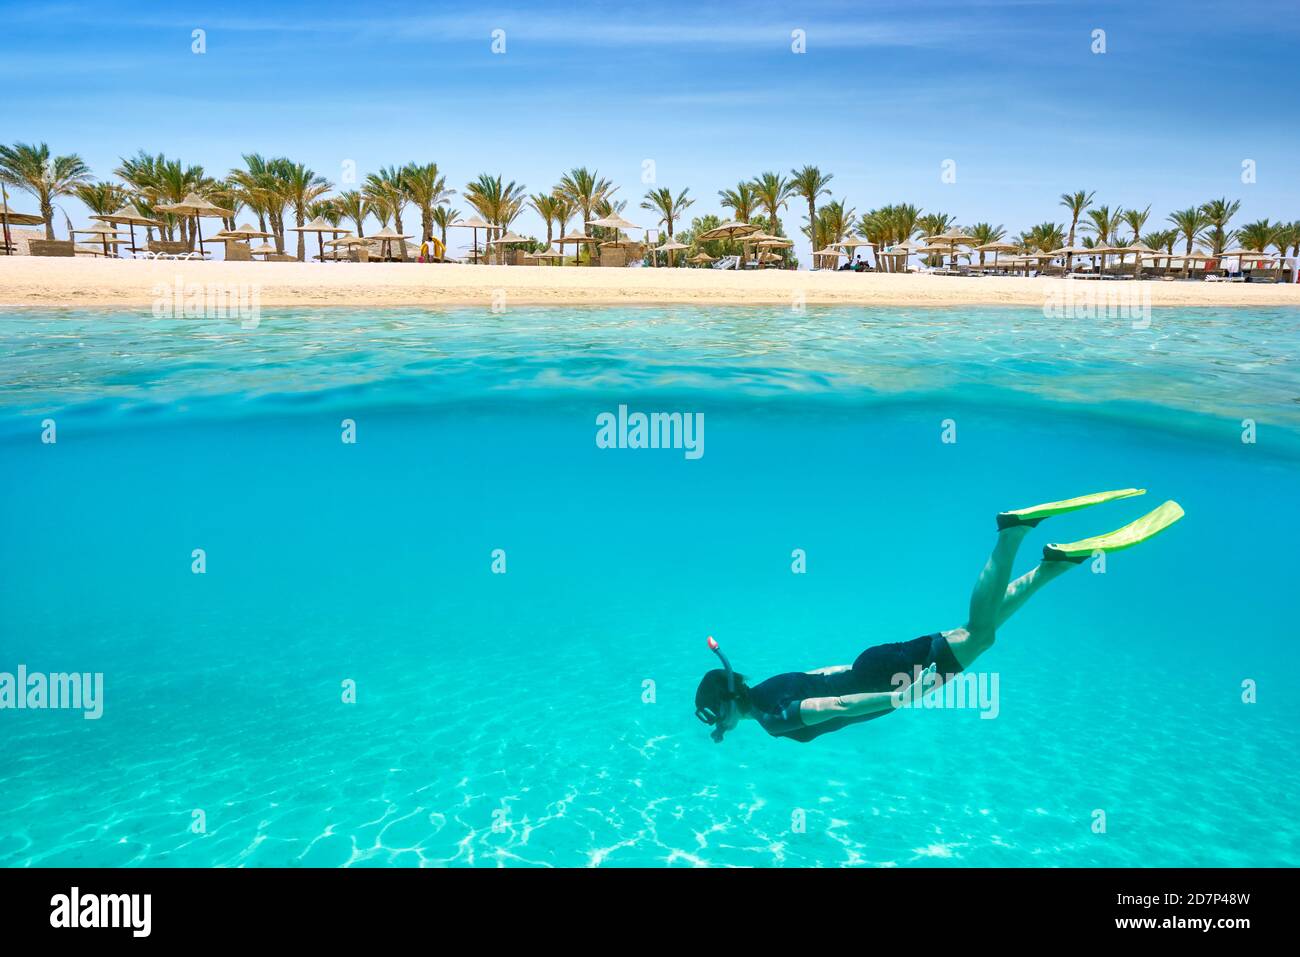 Rotes Meer, Ägypten - Unterwasser, Marsa Alam Riff schnorcheln Stockfoto